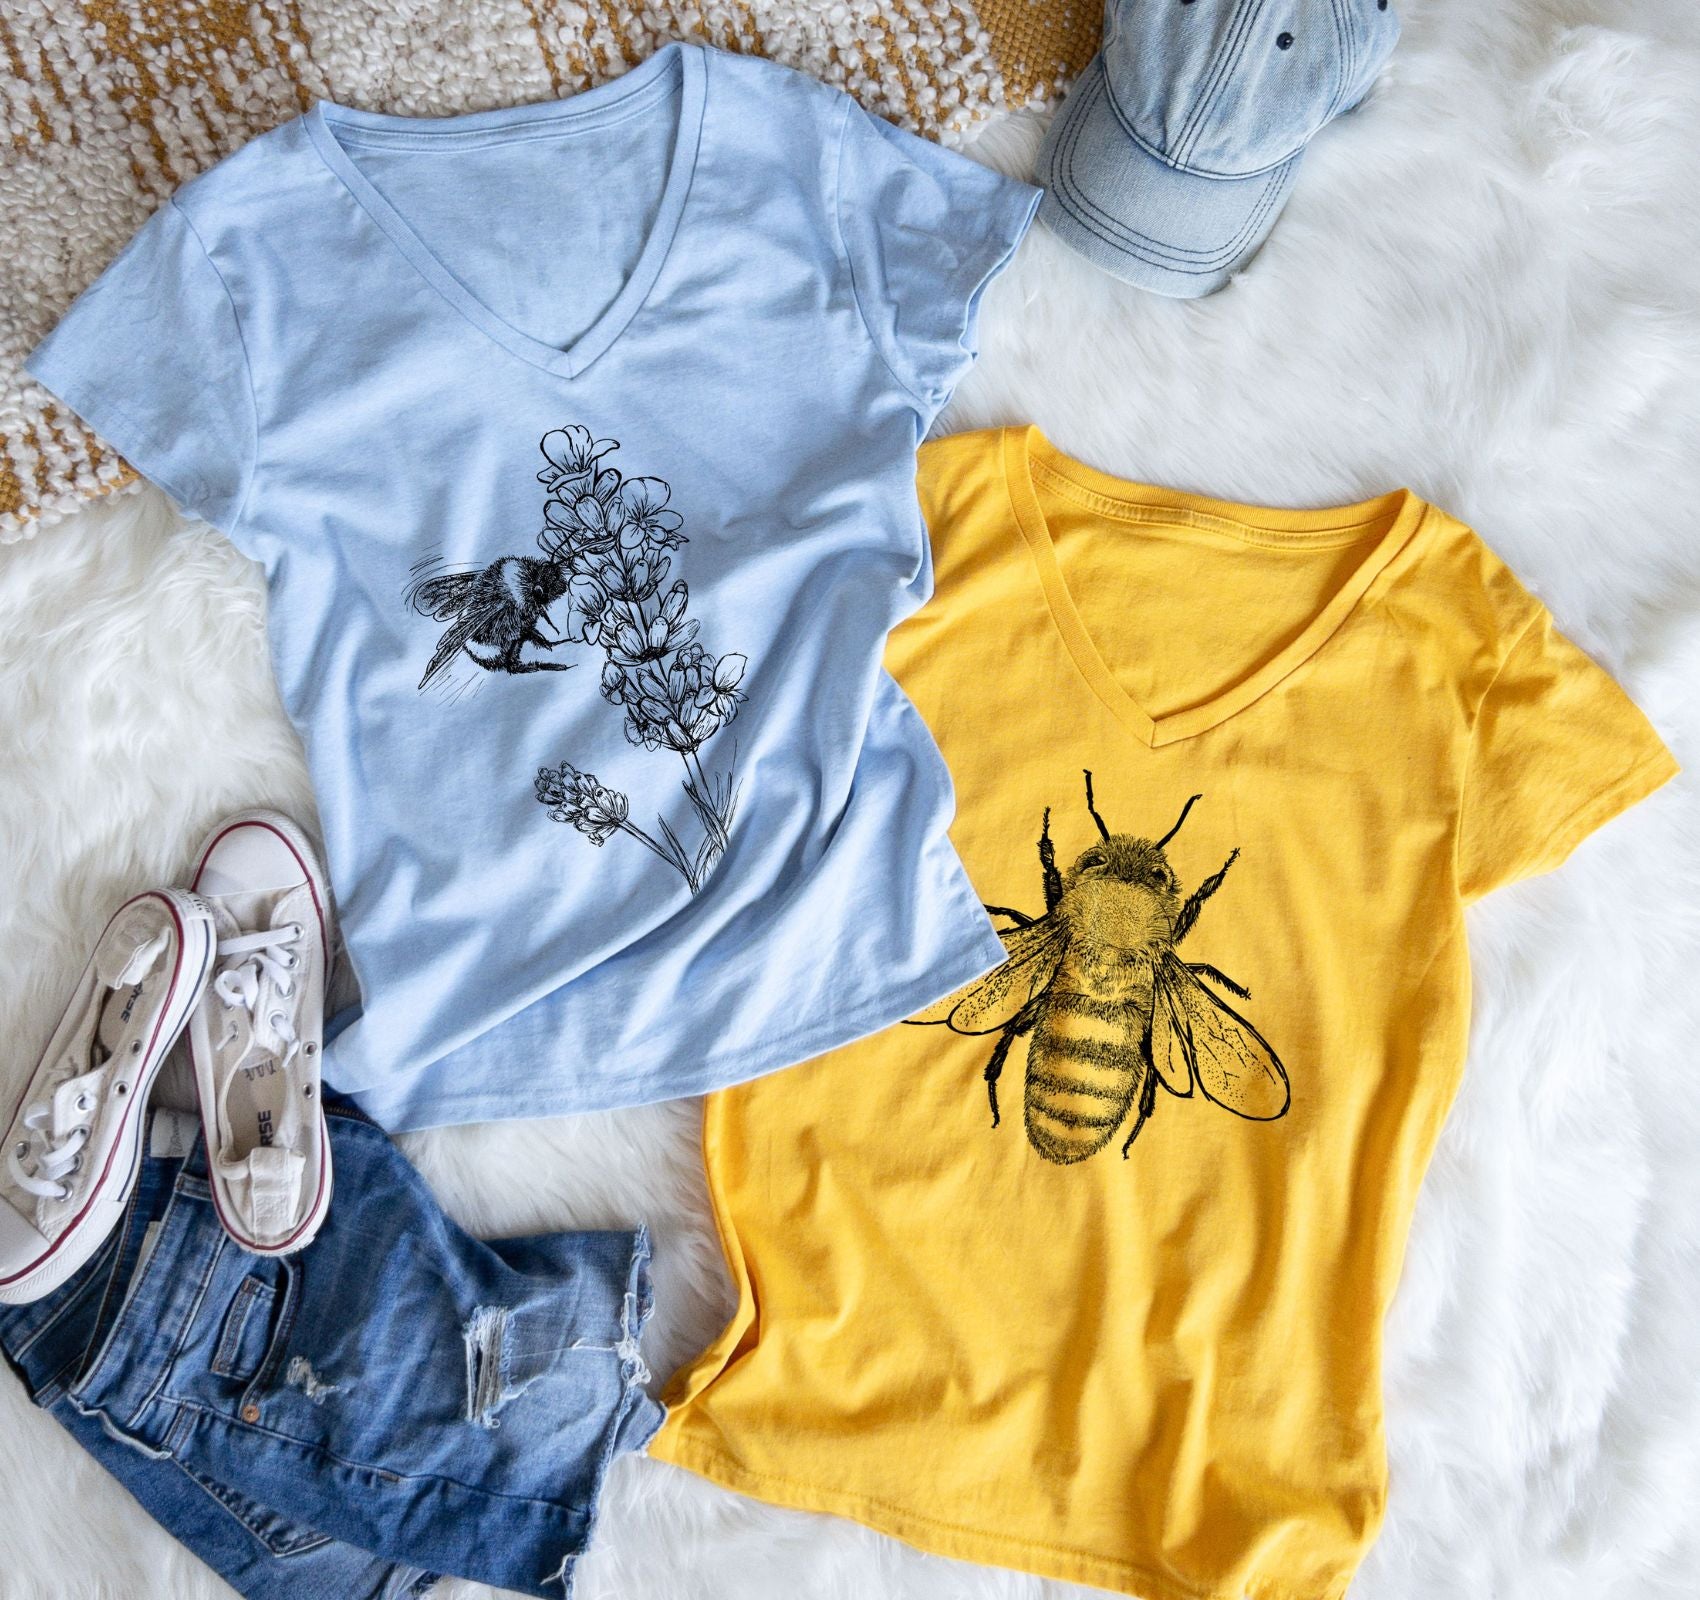 Honeybee and Bumblebee shirts